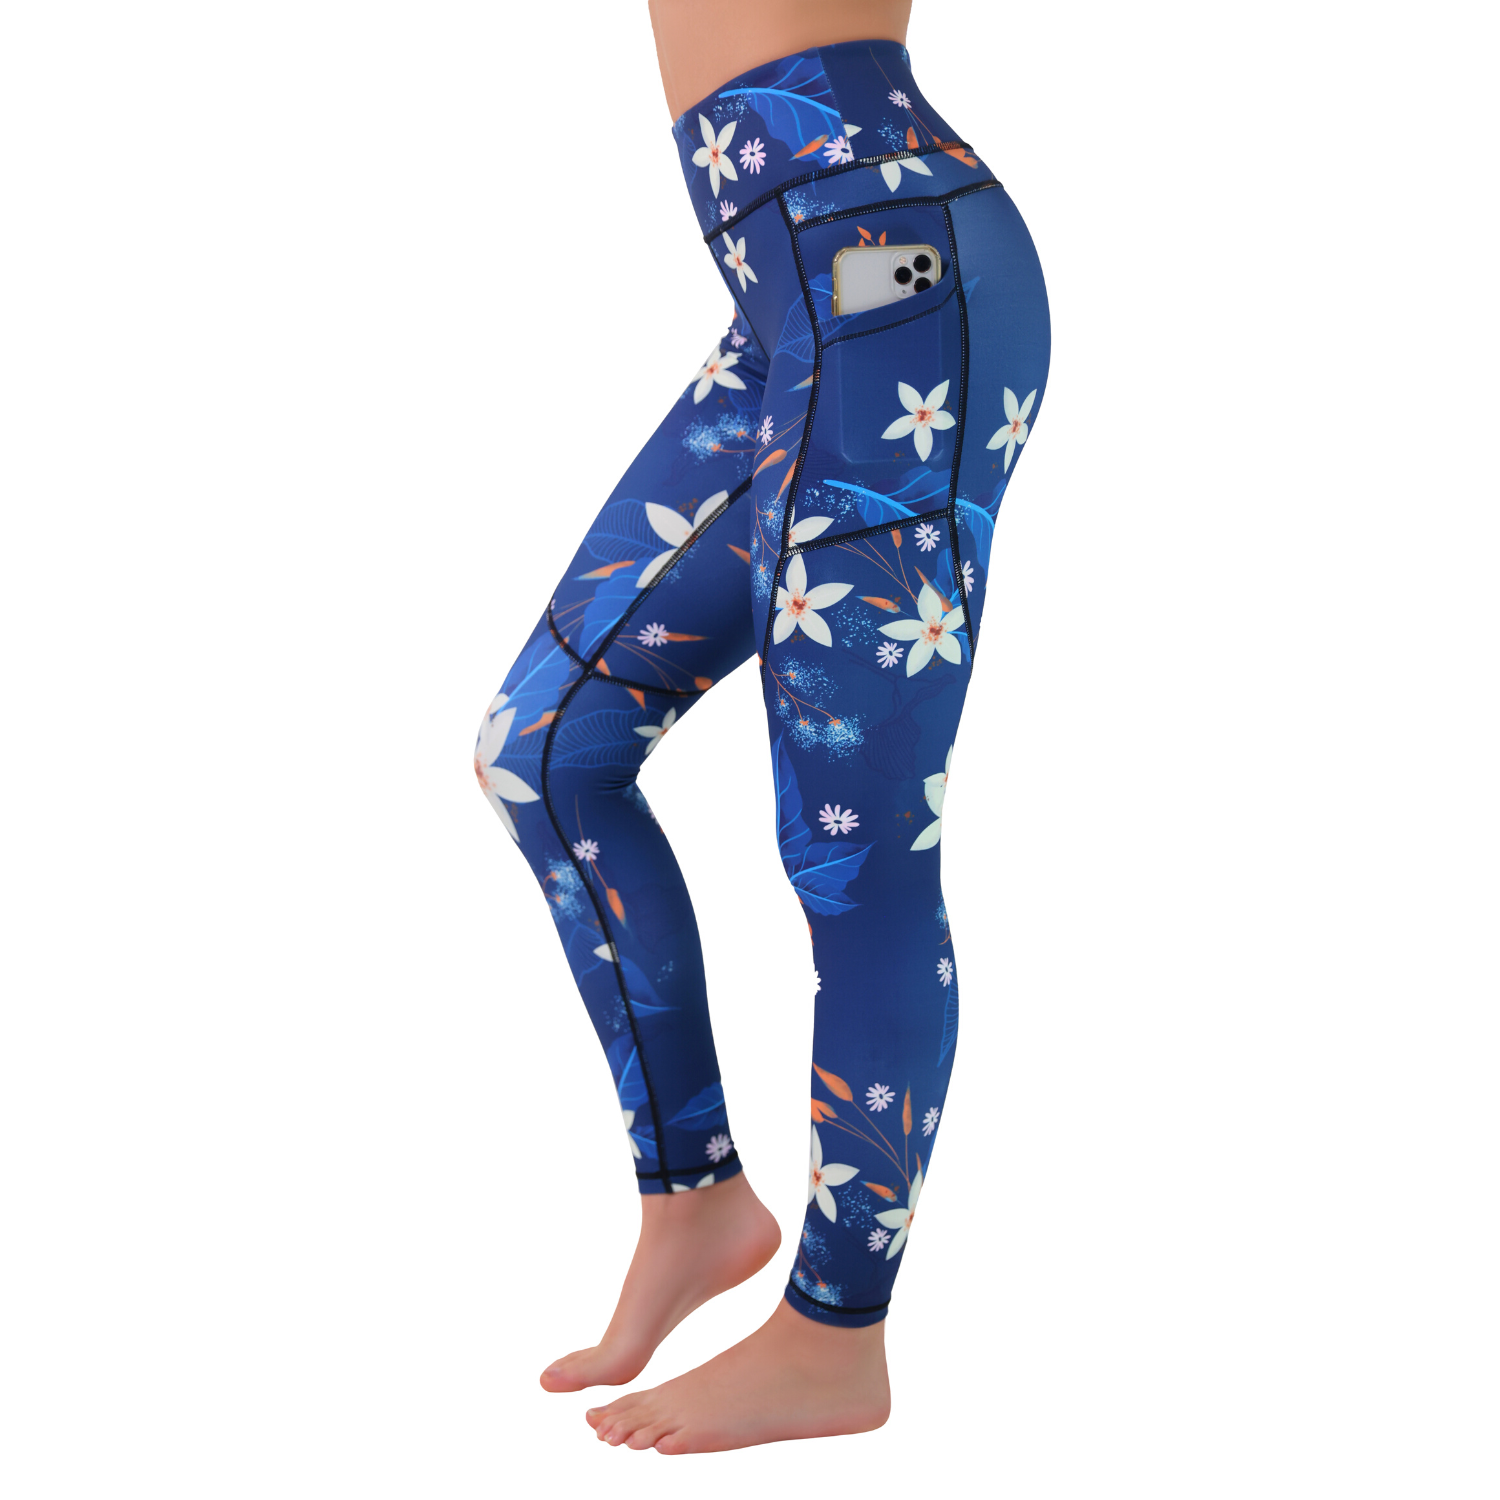 Women's Compression Leggings W/ Pockets - Flower Blue